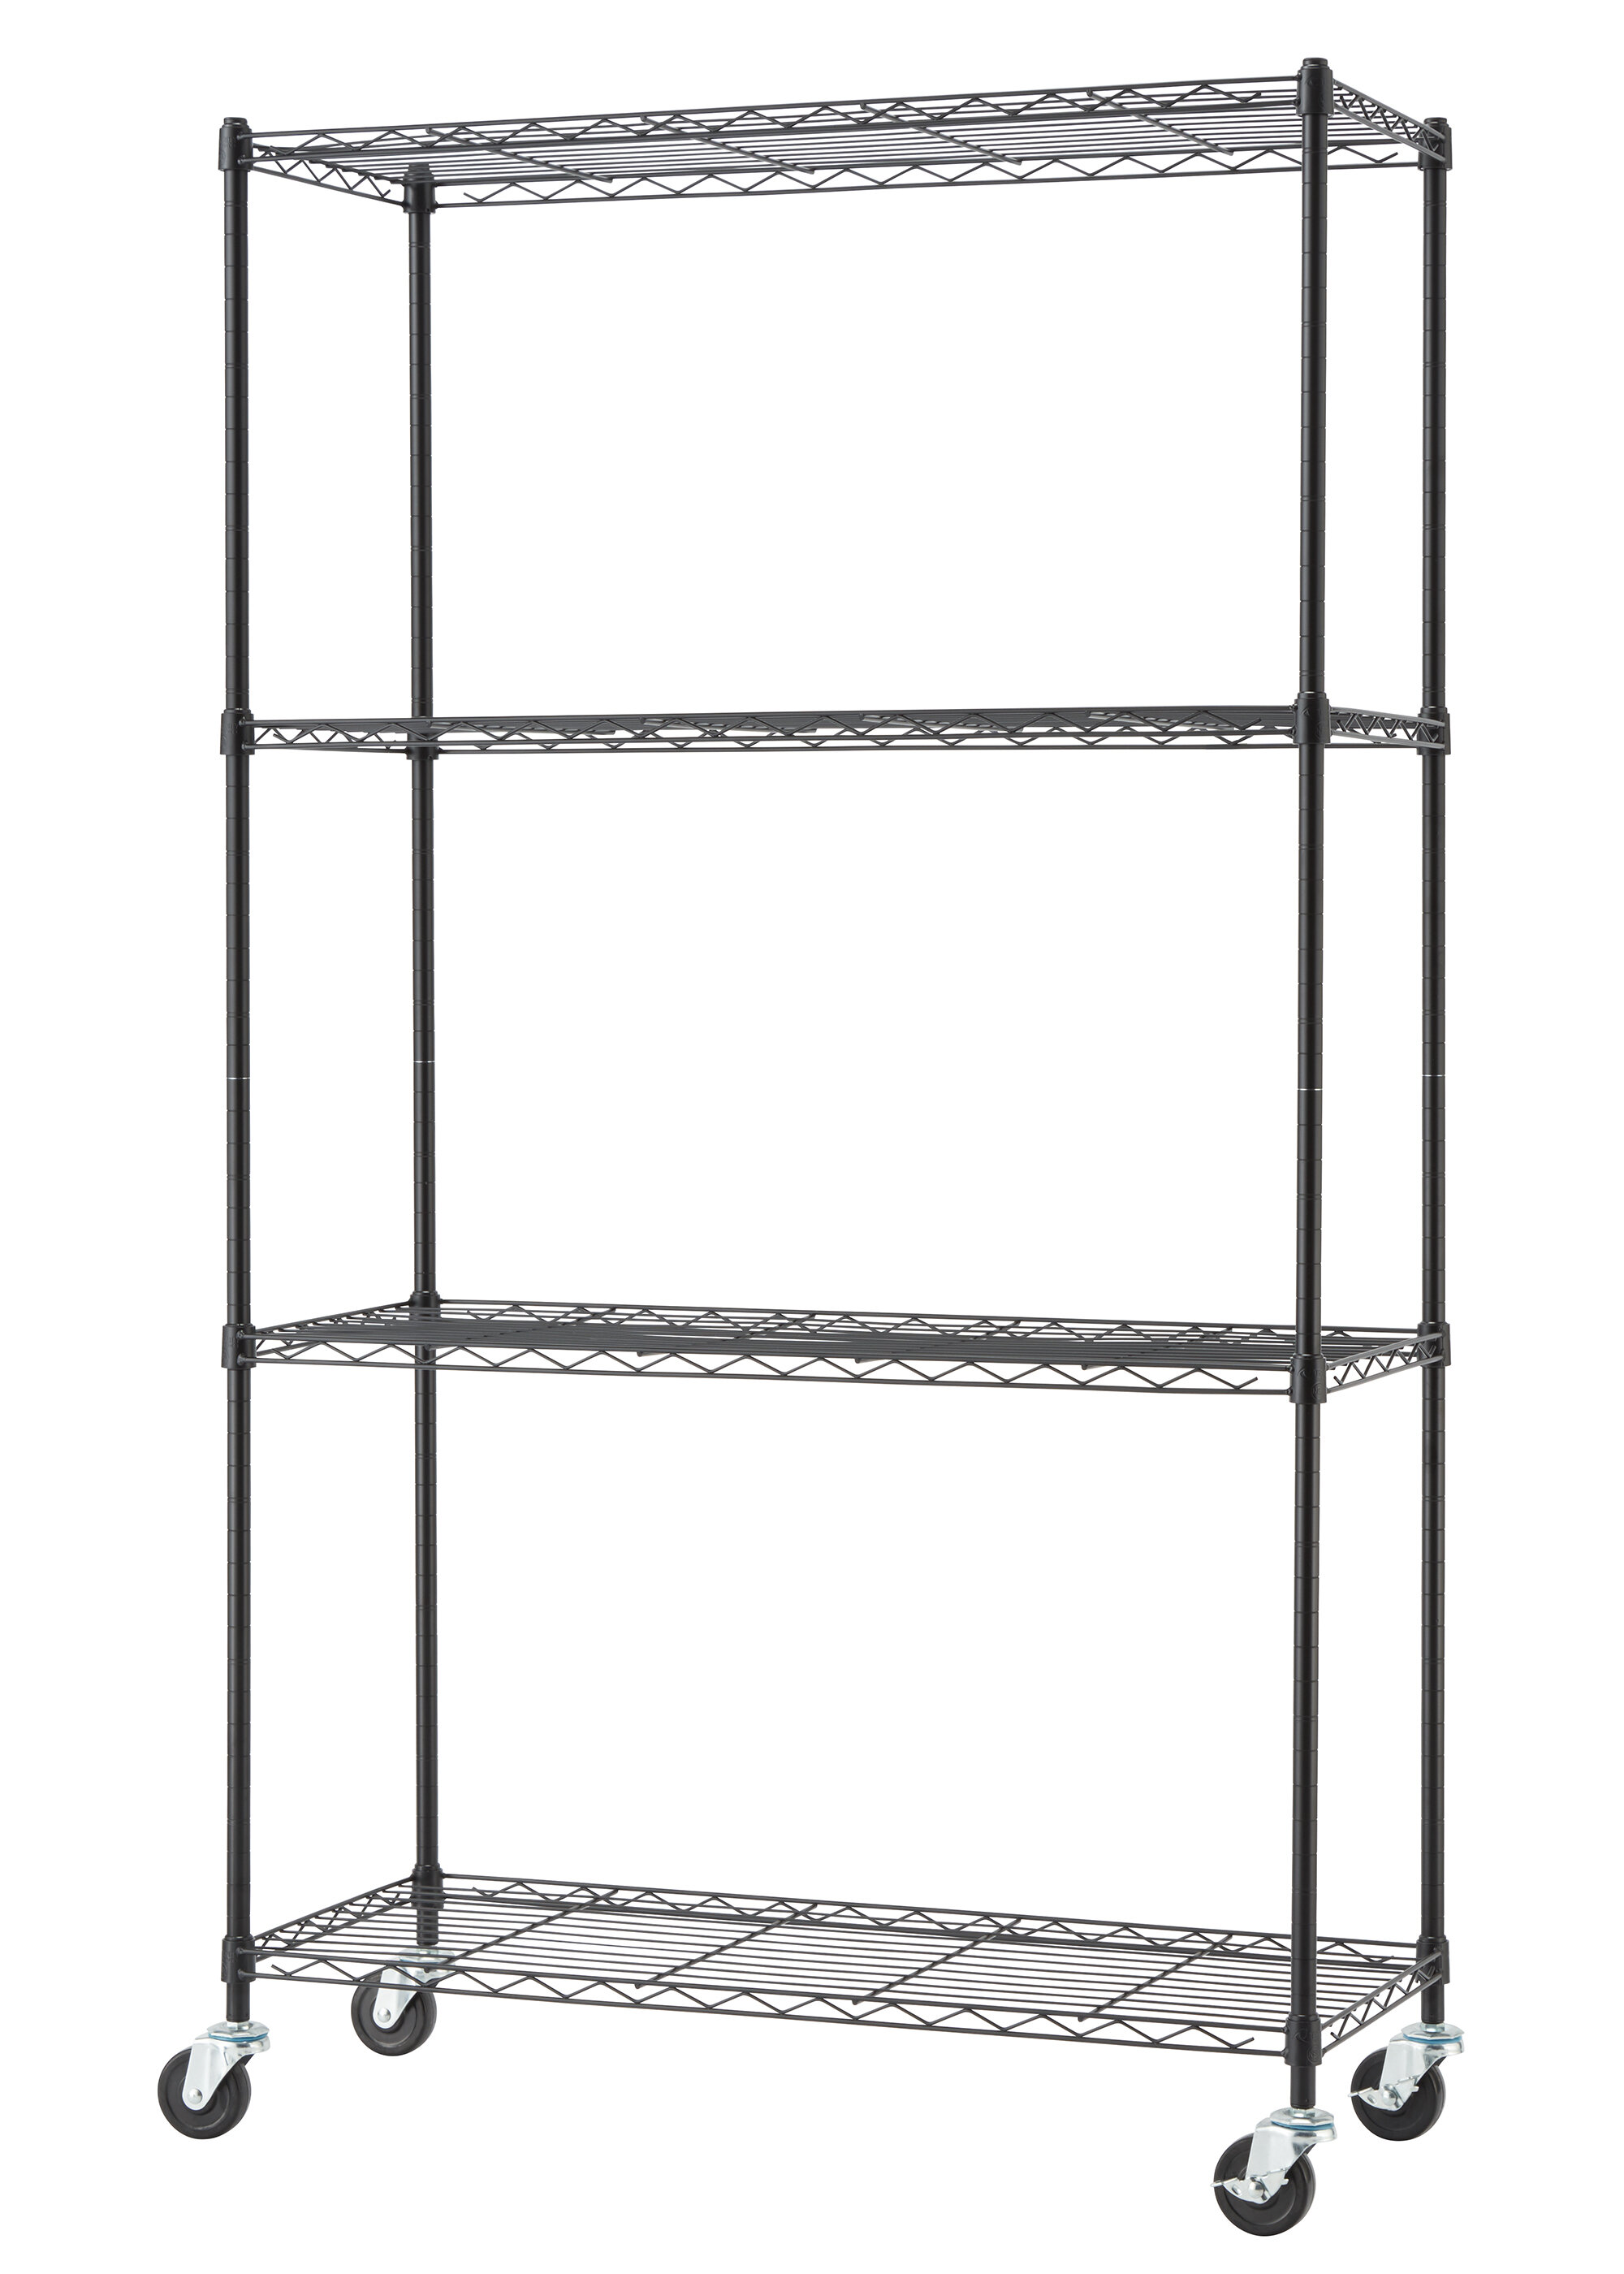 Details about   Metal Storage Shelf Industrial 5-Shelf Rack Boltless Utility Garage Organizer 